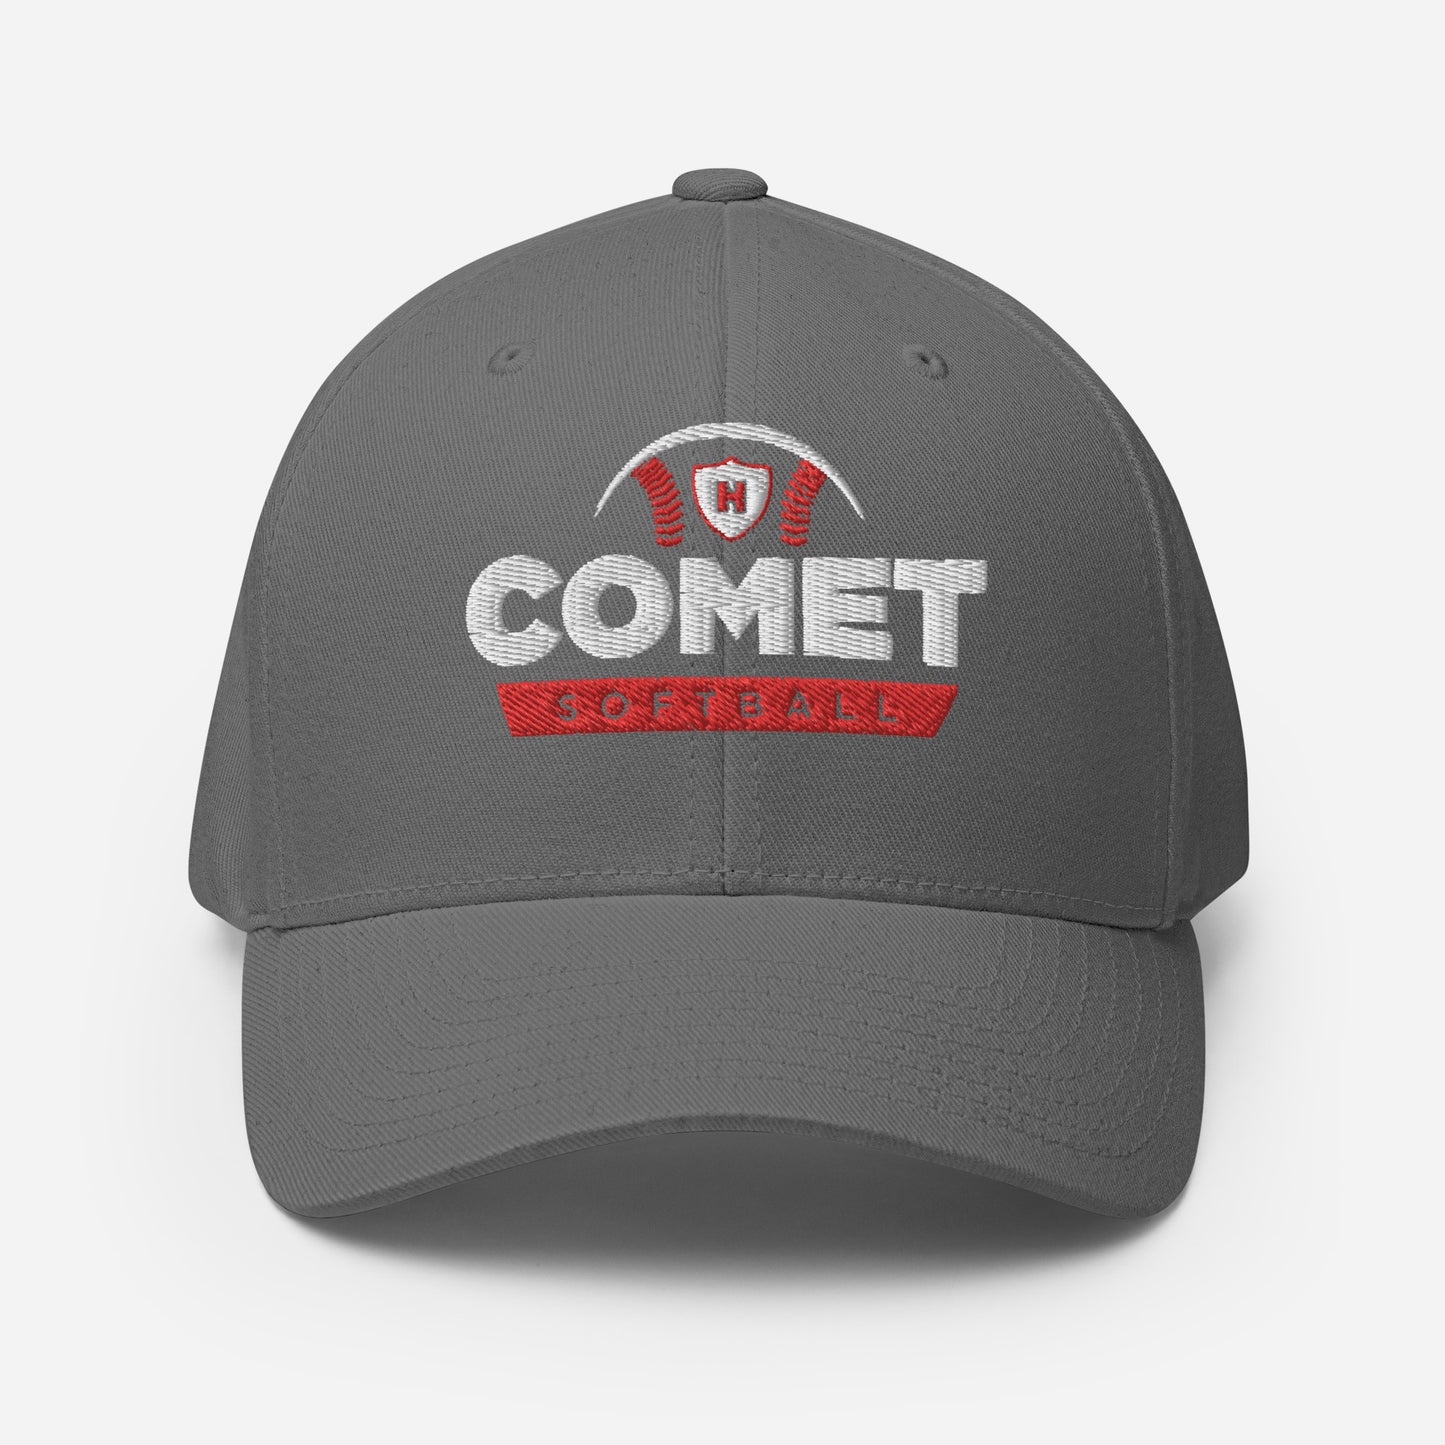 Comet Softball - Structured Twill Cap